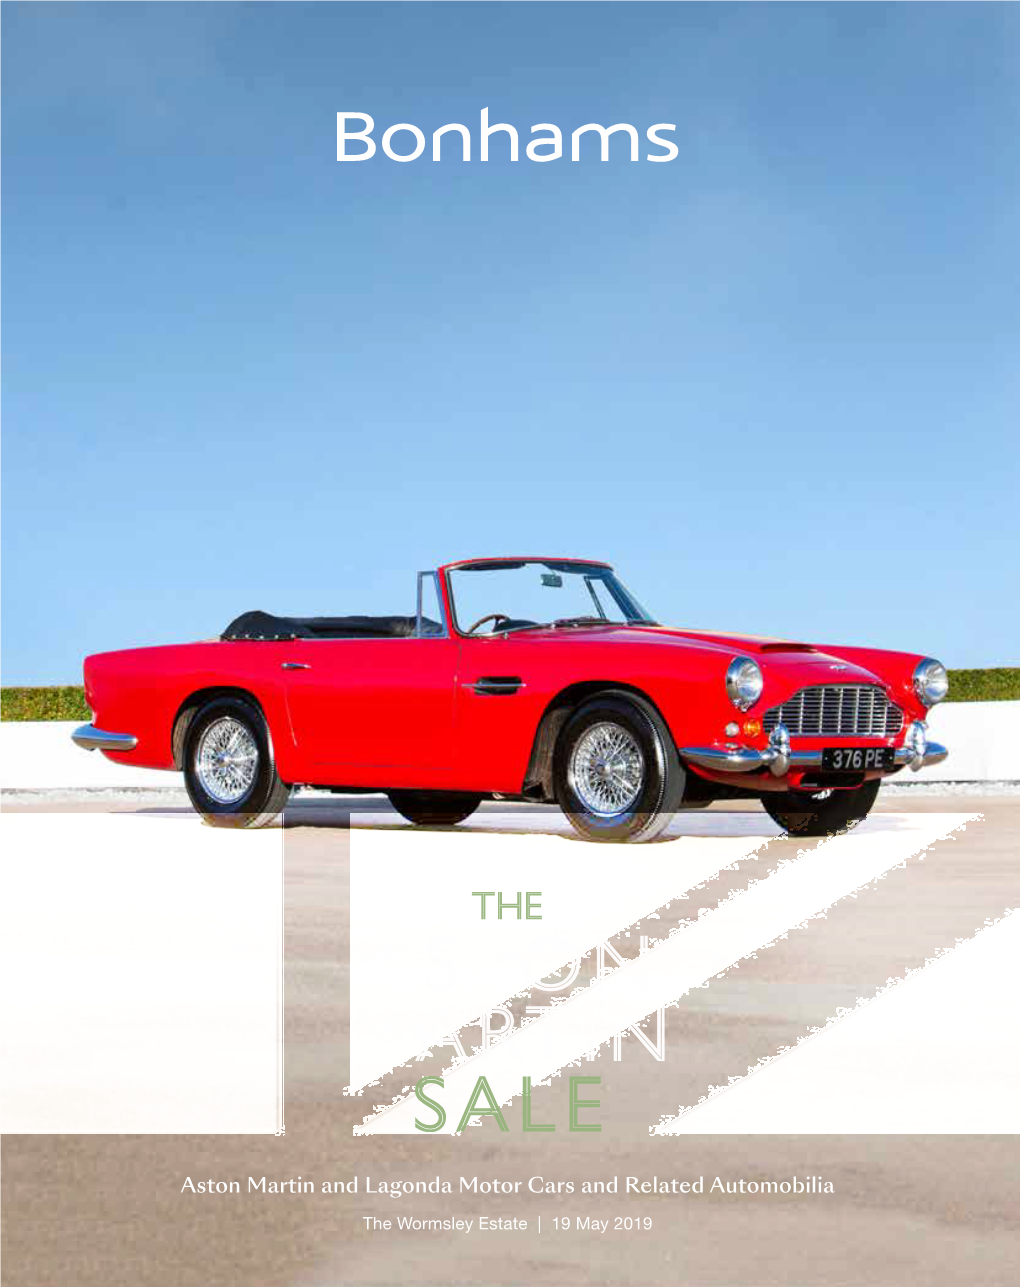 Aston Martin and Lagonda Motor Cars and Related Automobilia